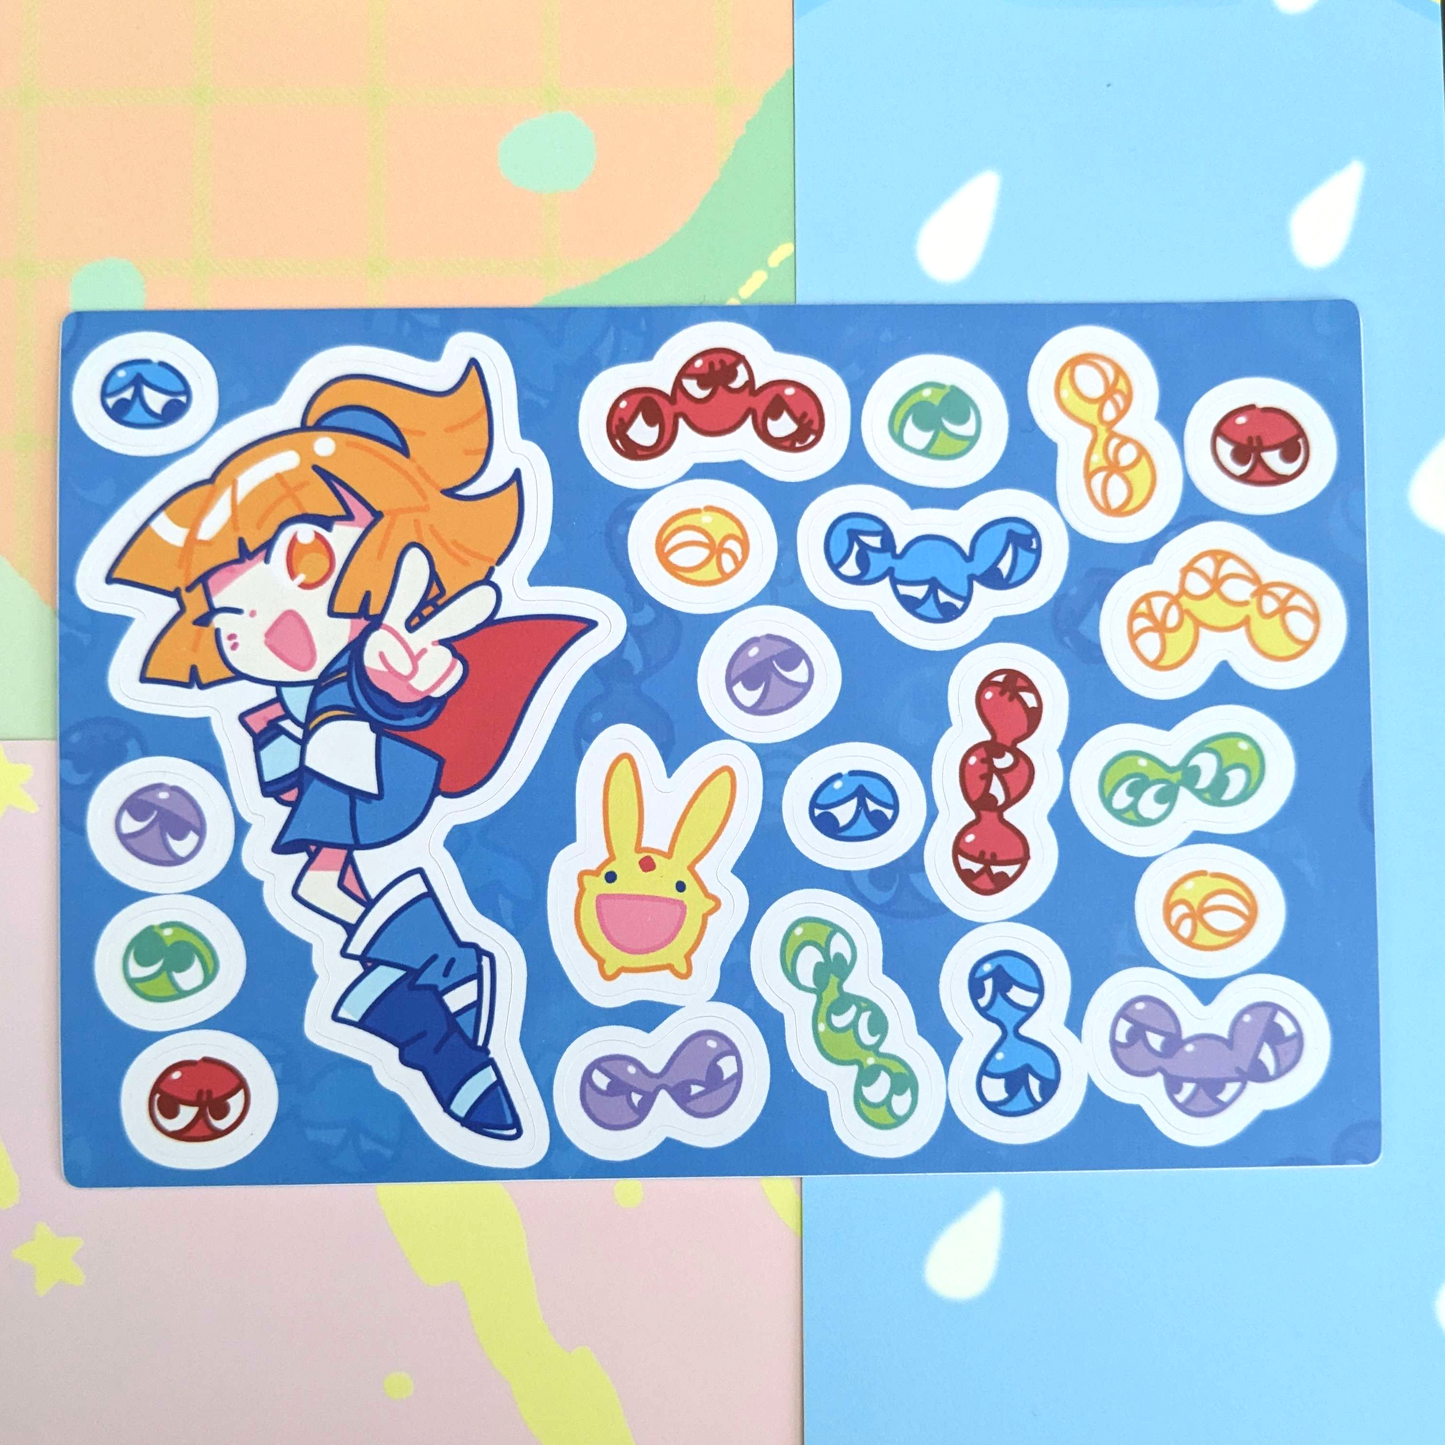 Puyo Puyo 4"x6" Sticker Sheet